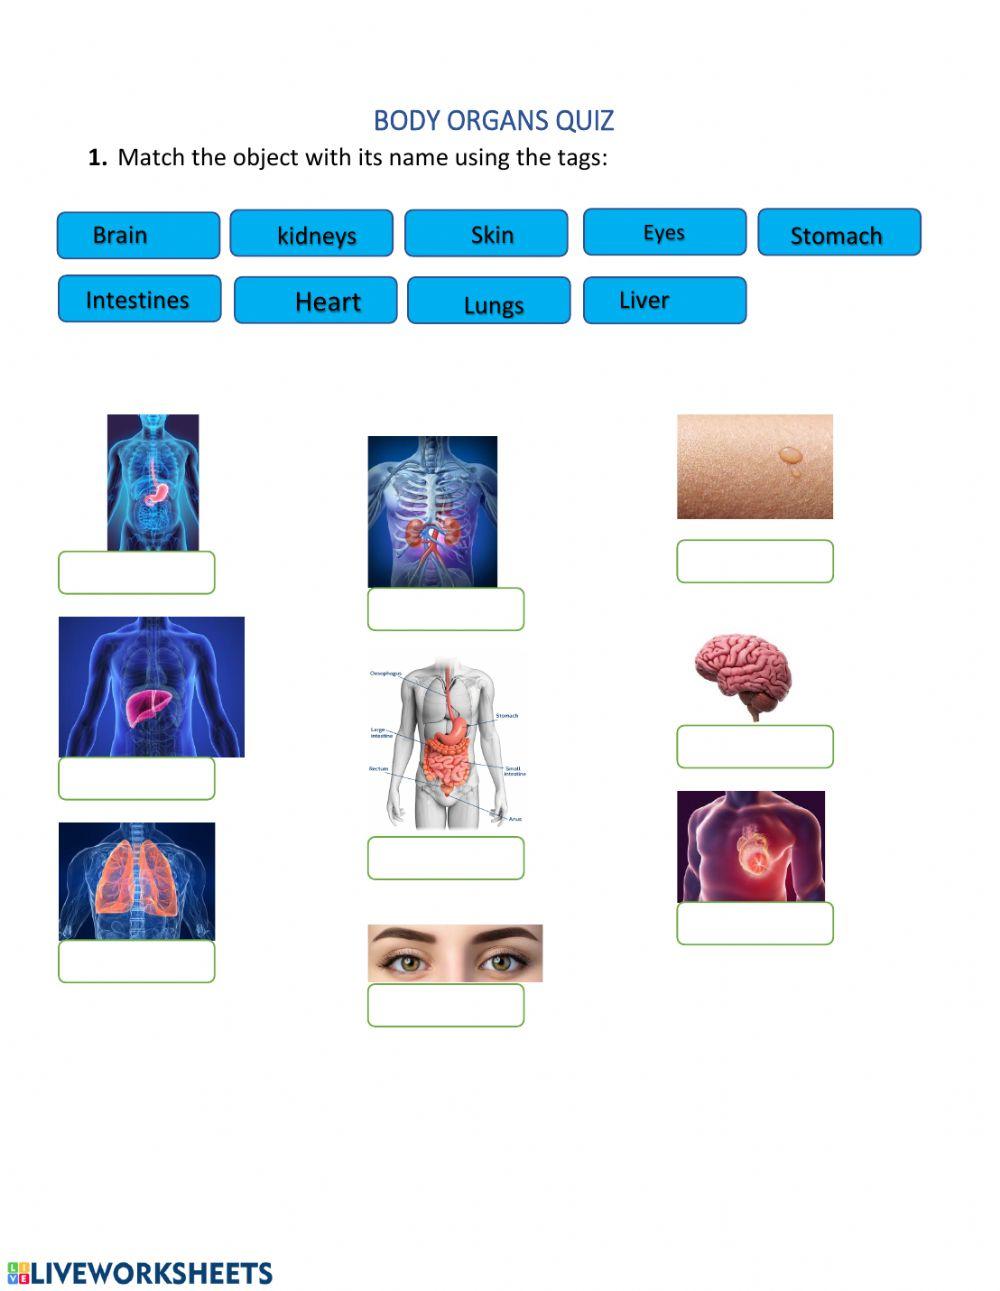 Body organs quiz